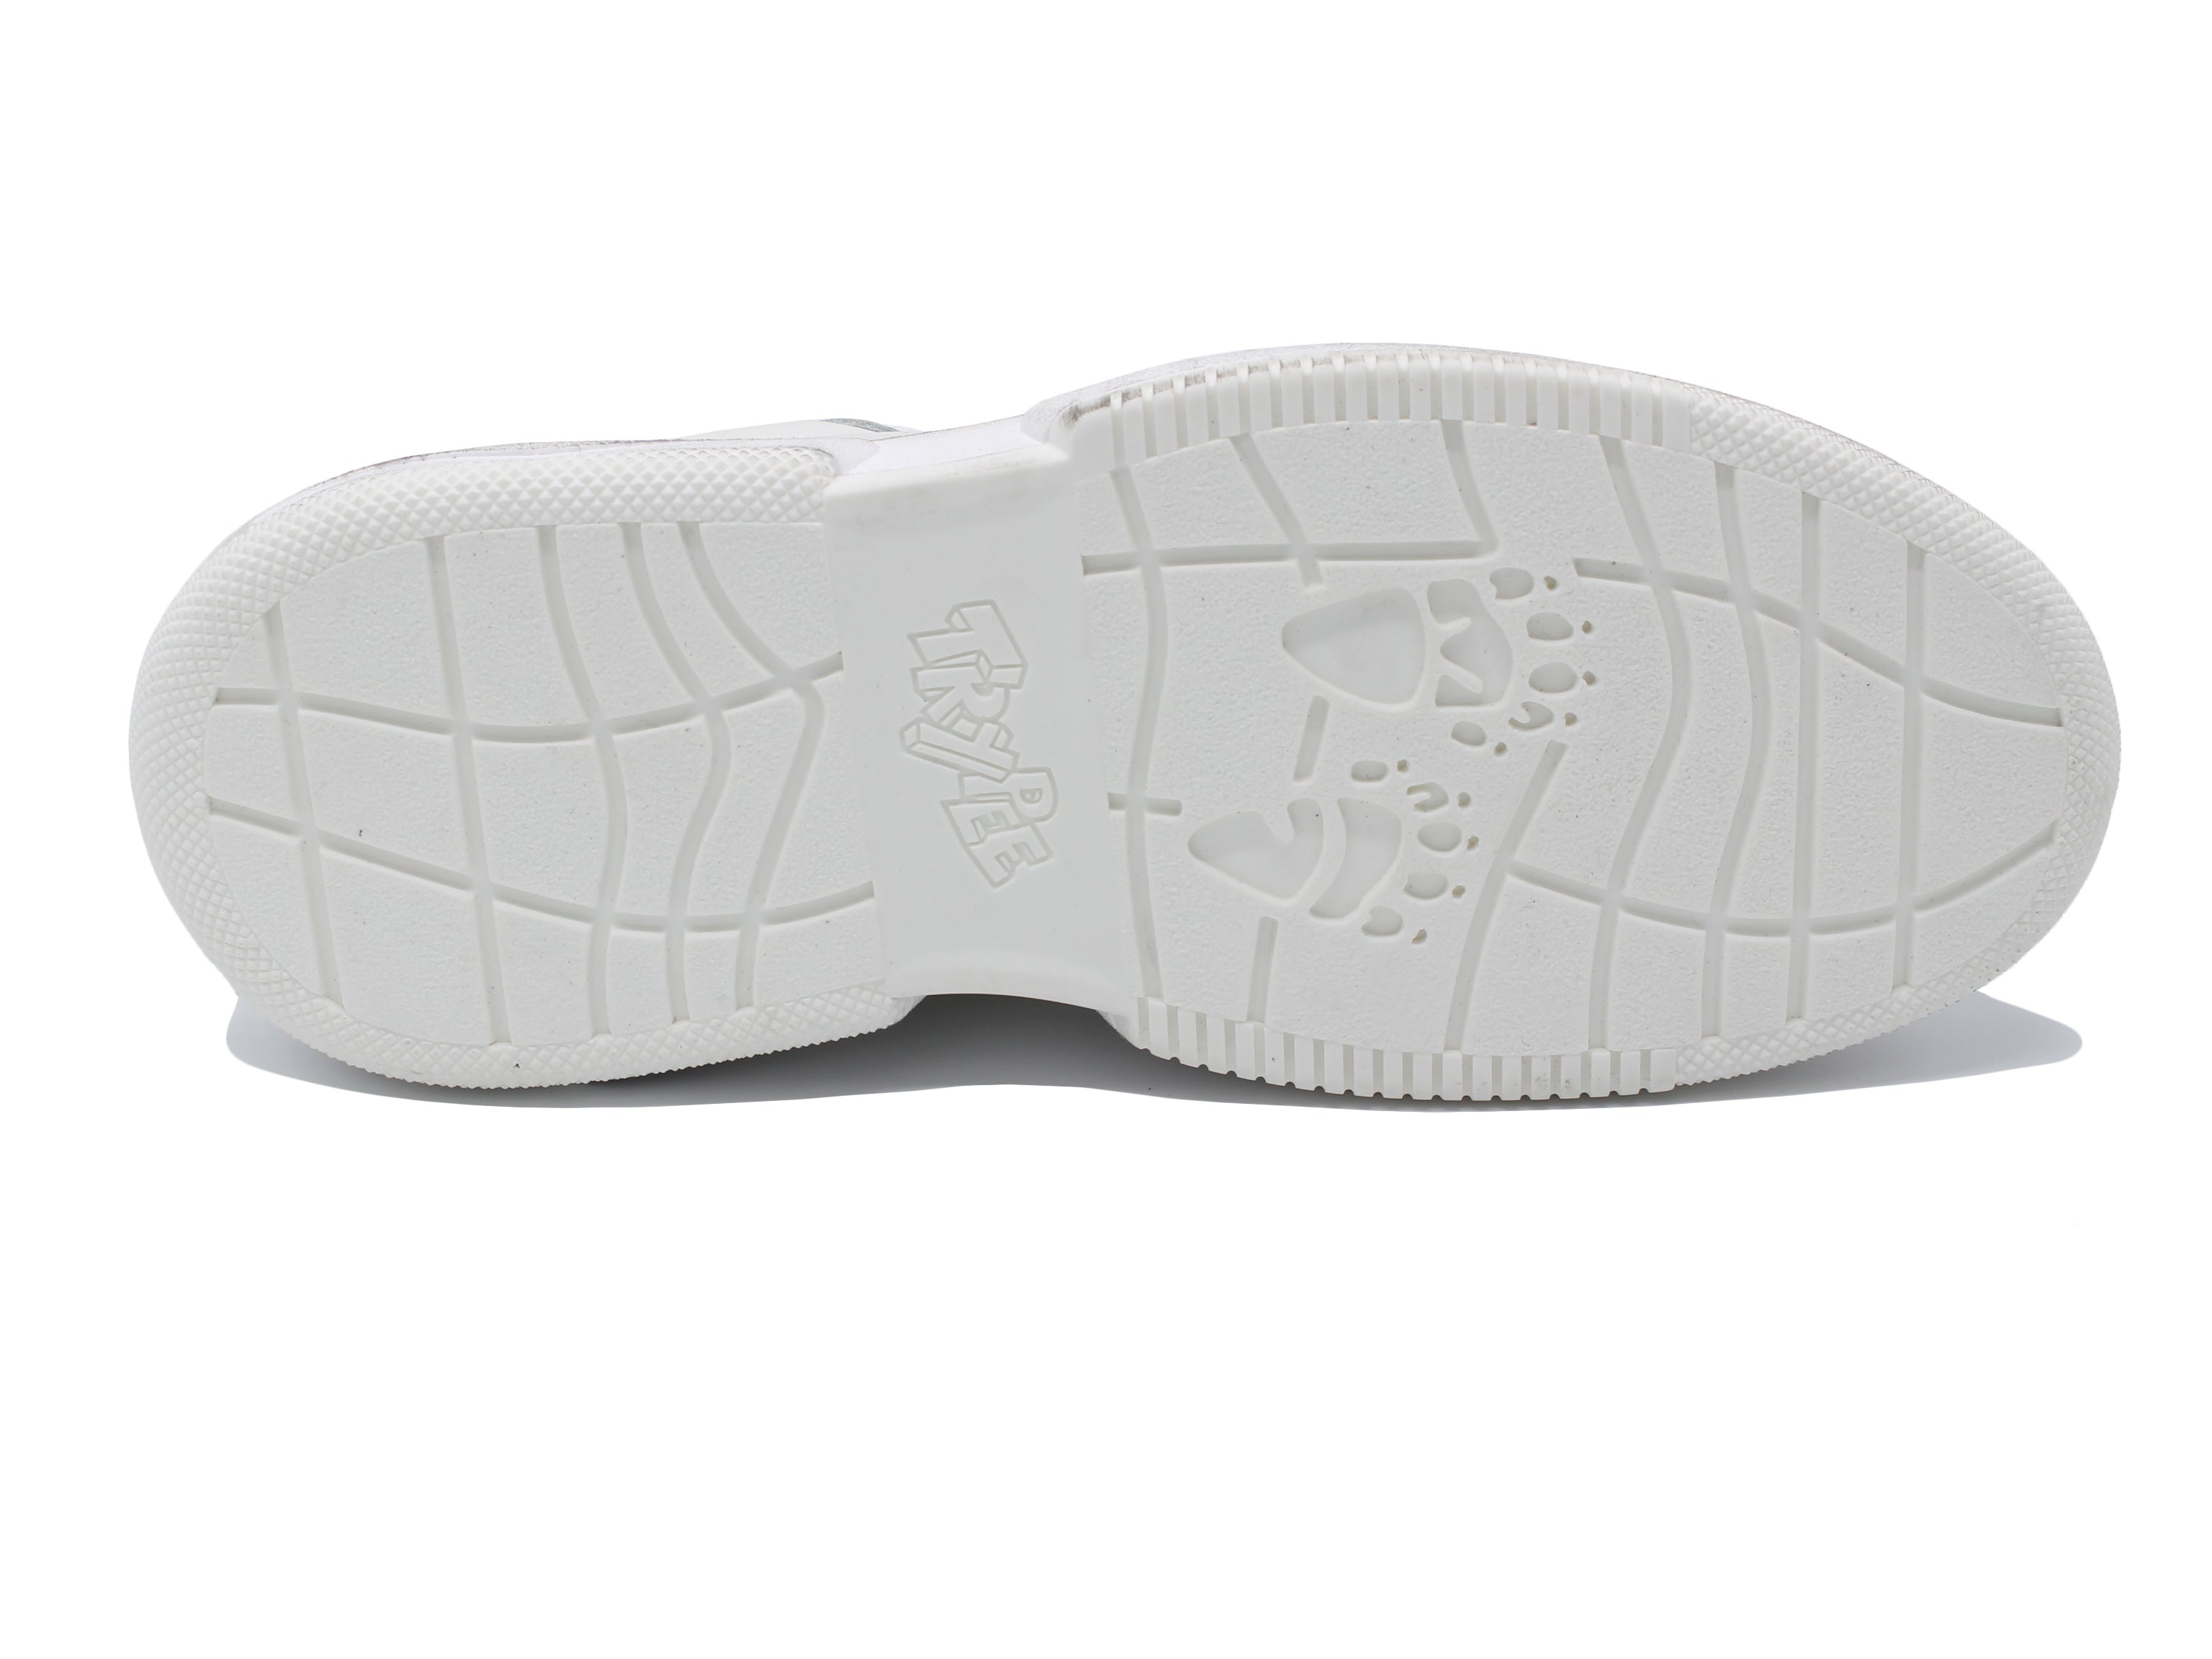 Sneaker S104 white-black